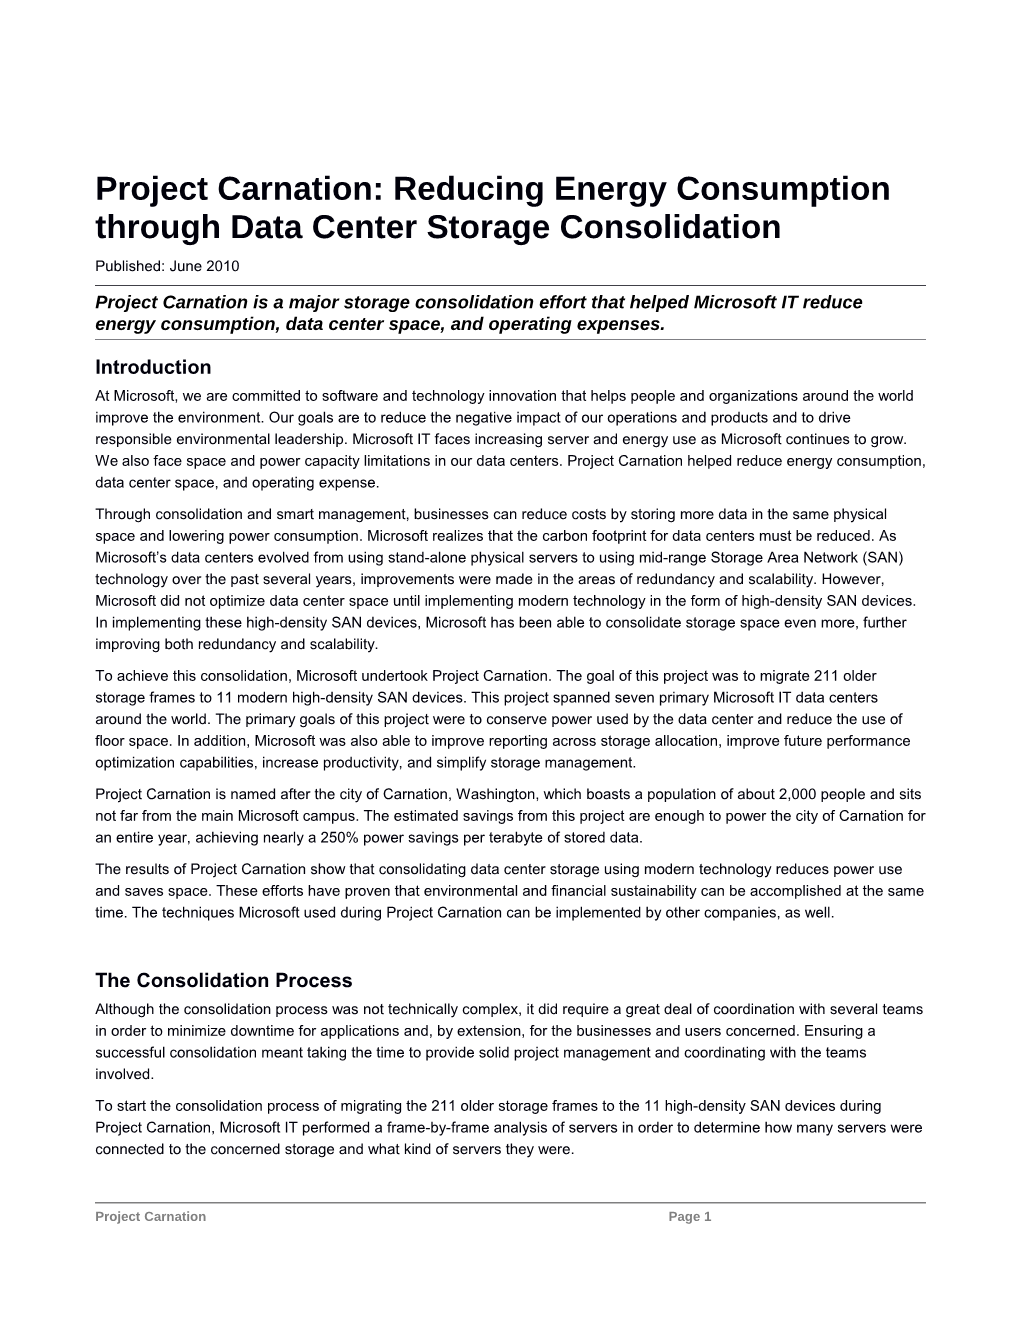 IT Showcase: Project Carnation: Reducing Energy Consumption Through Data Center Storage